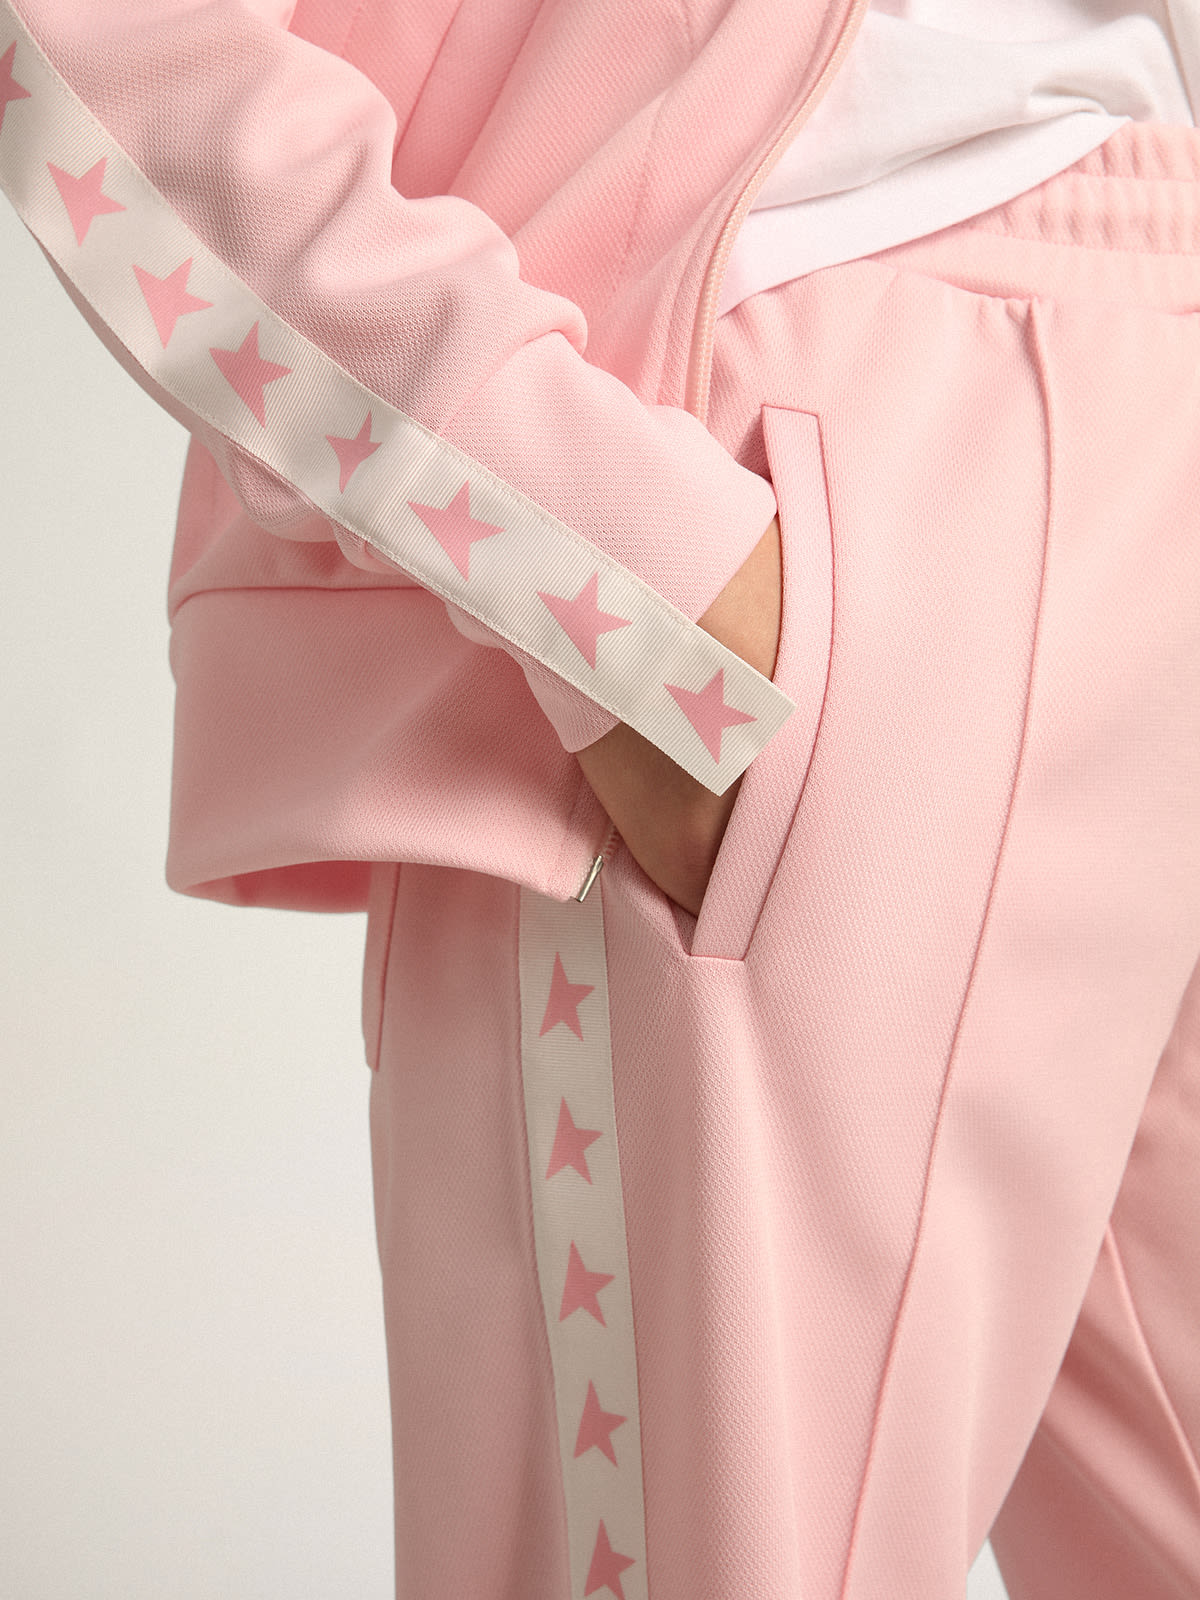 Golden Goose - Women’s pink zipped sweatshirt with contrasting pink stars in 